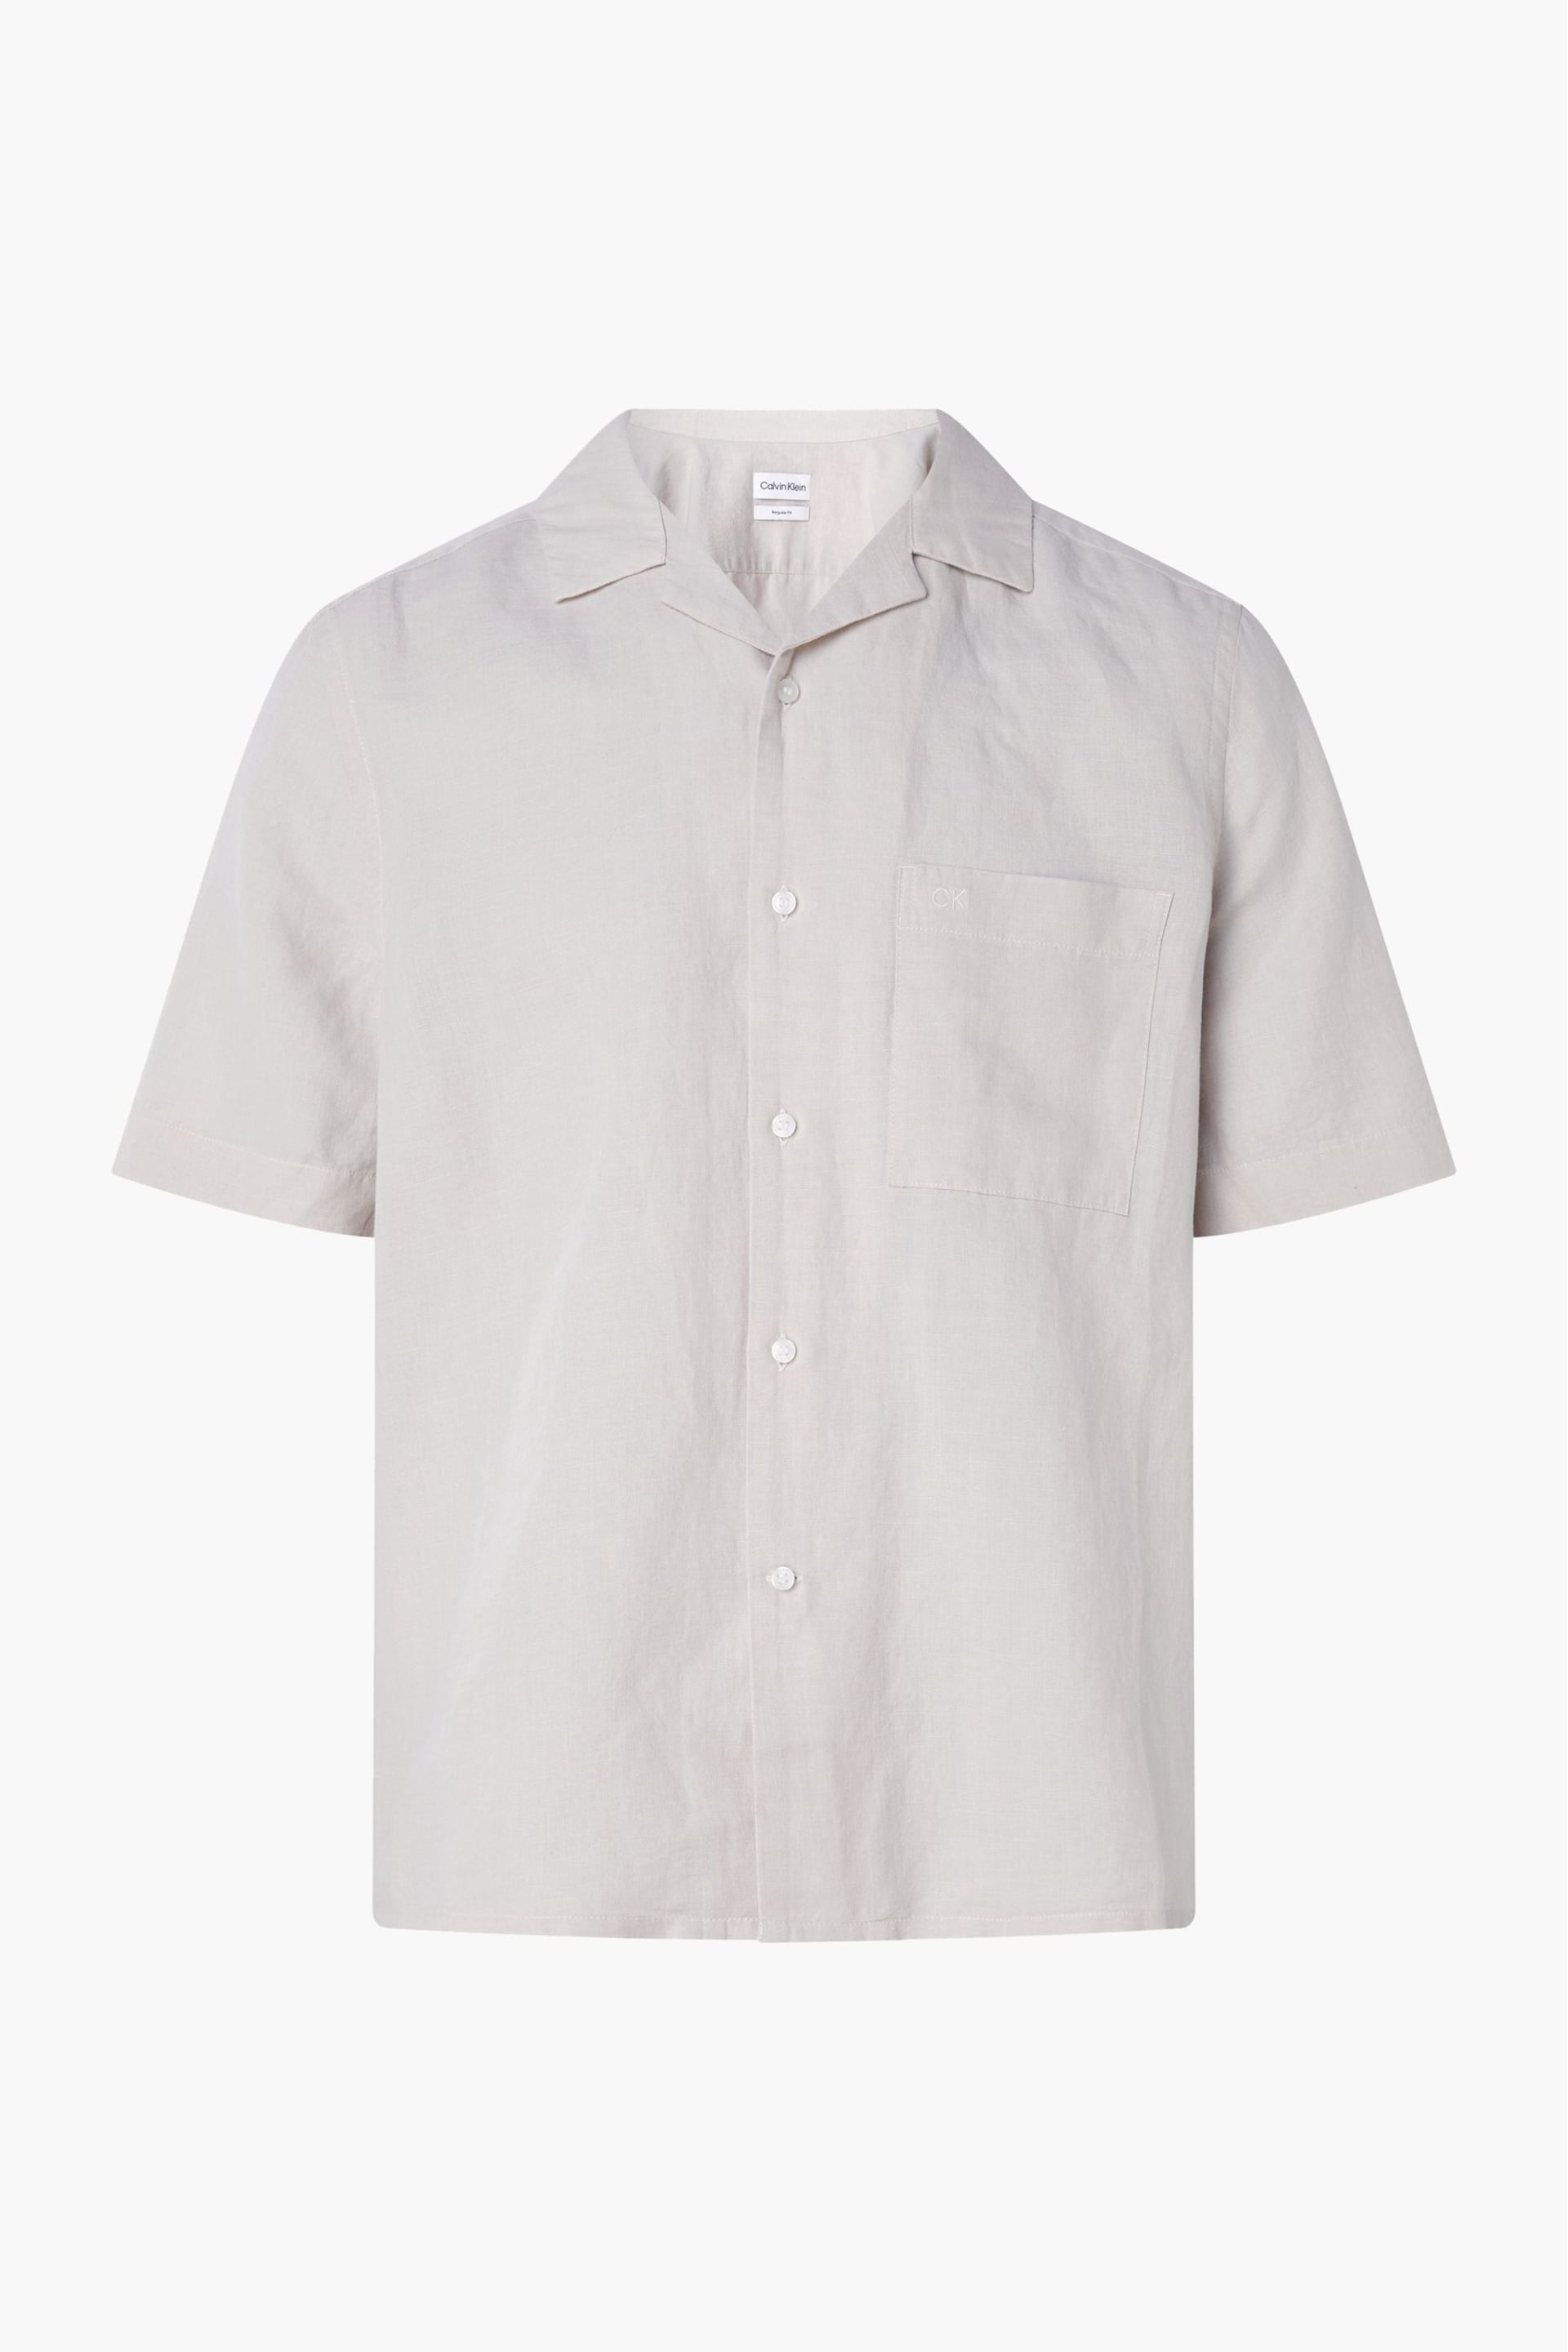 Calvin Klein Natural Linen Cuban Shirt - Image 4 of 5